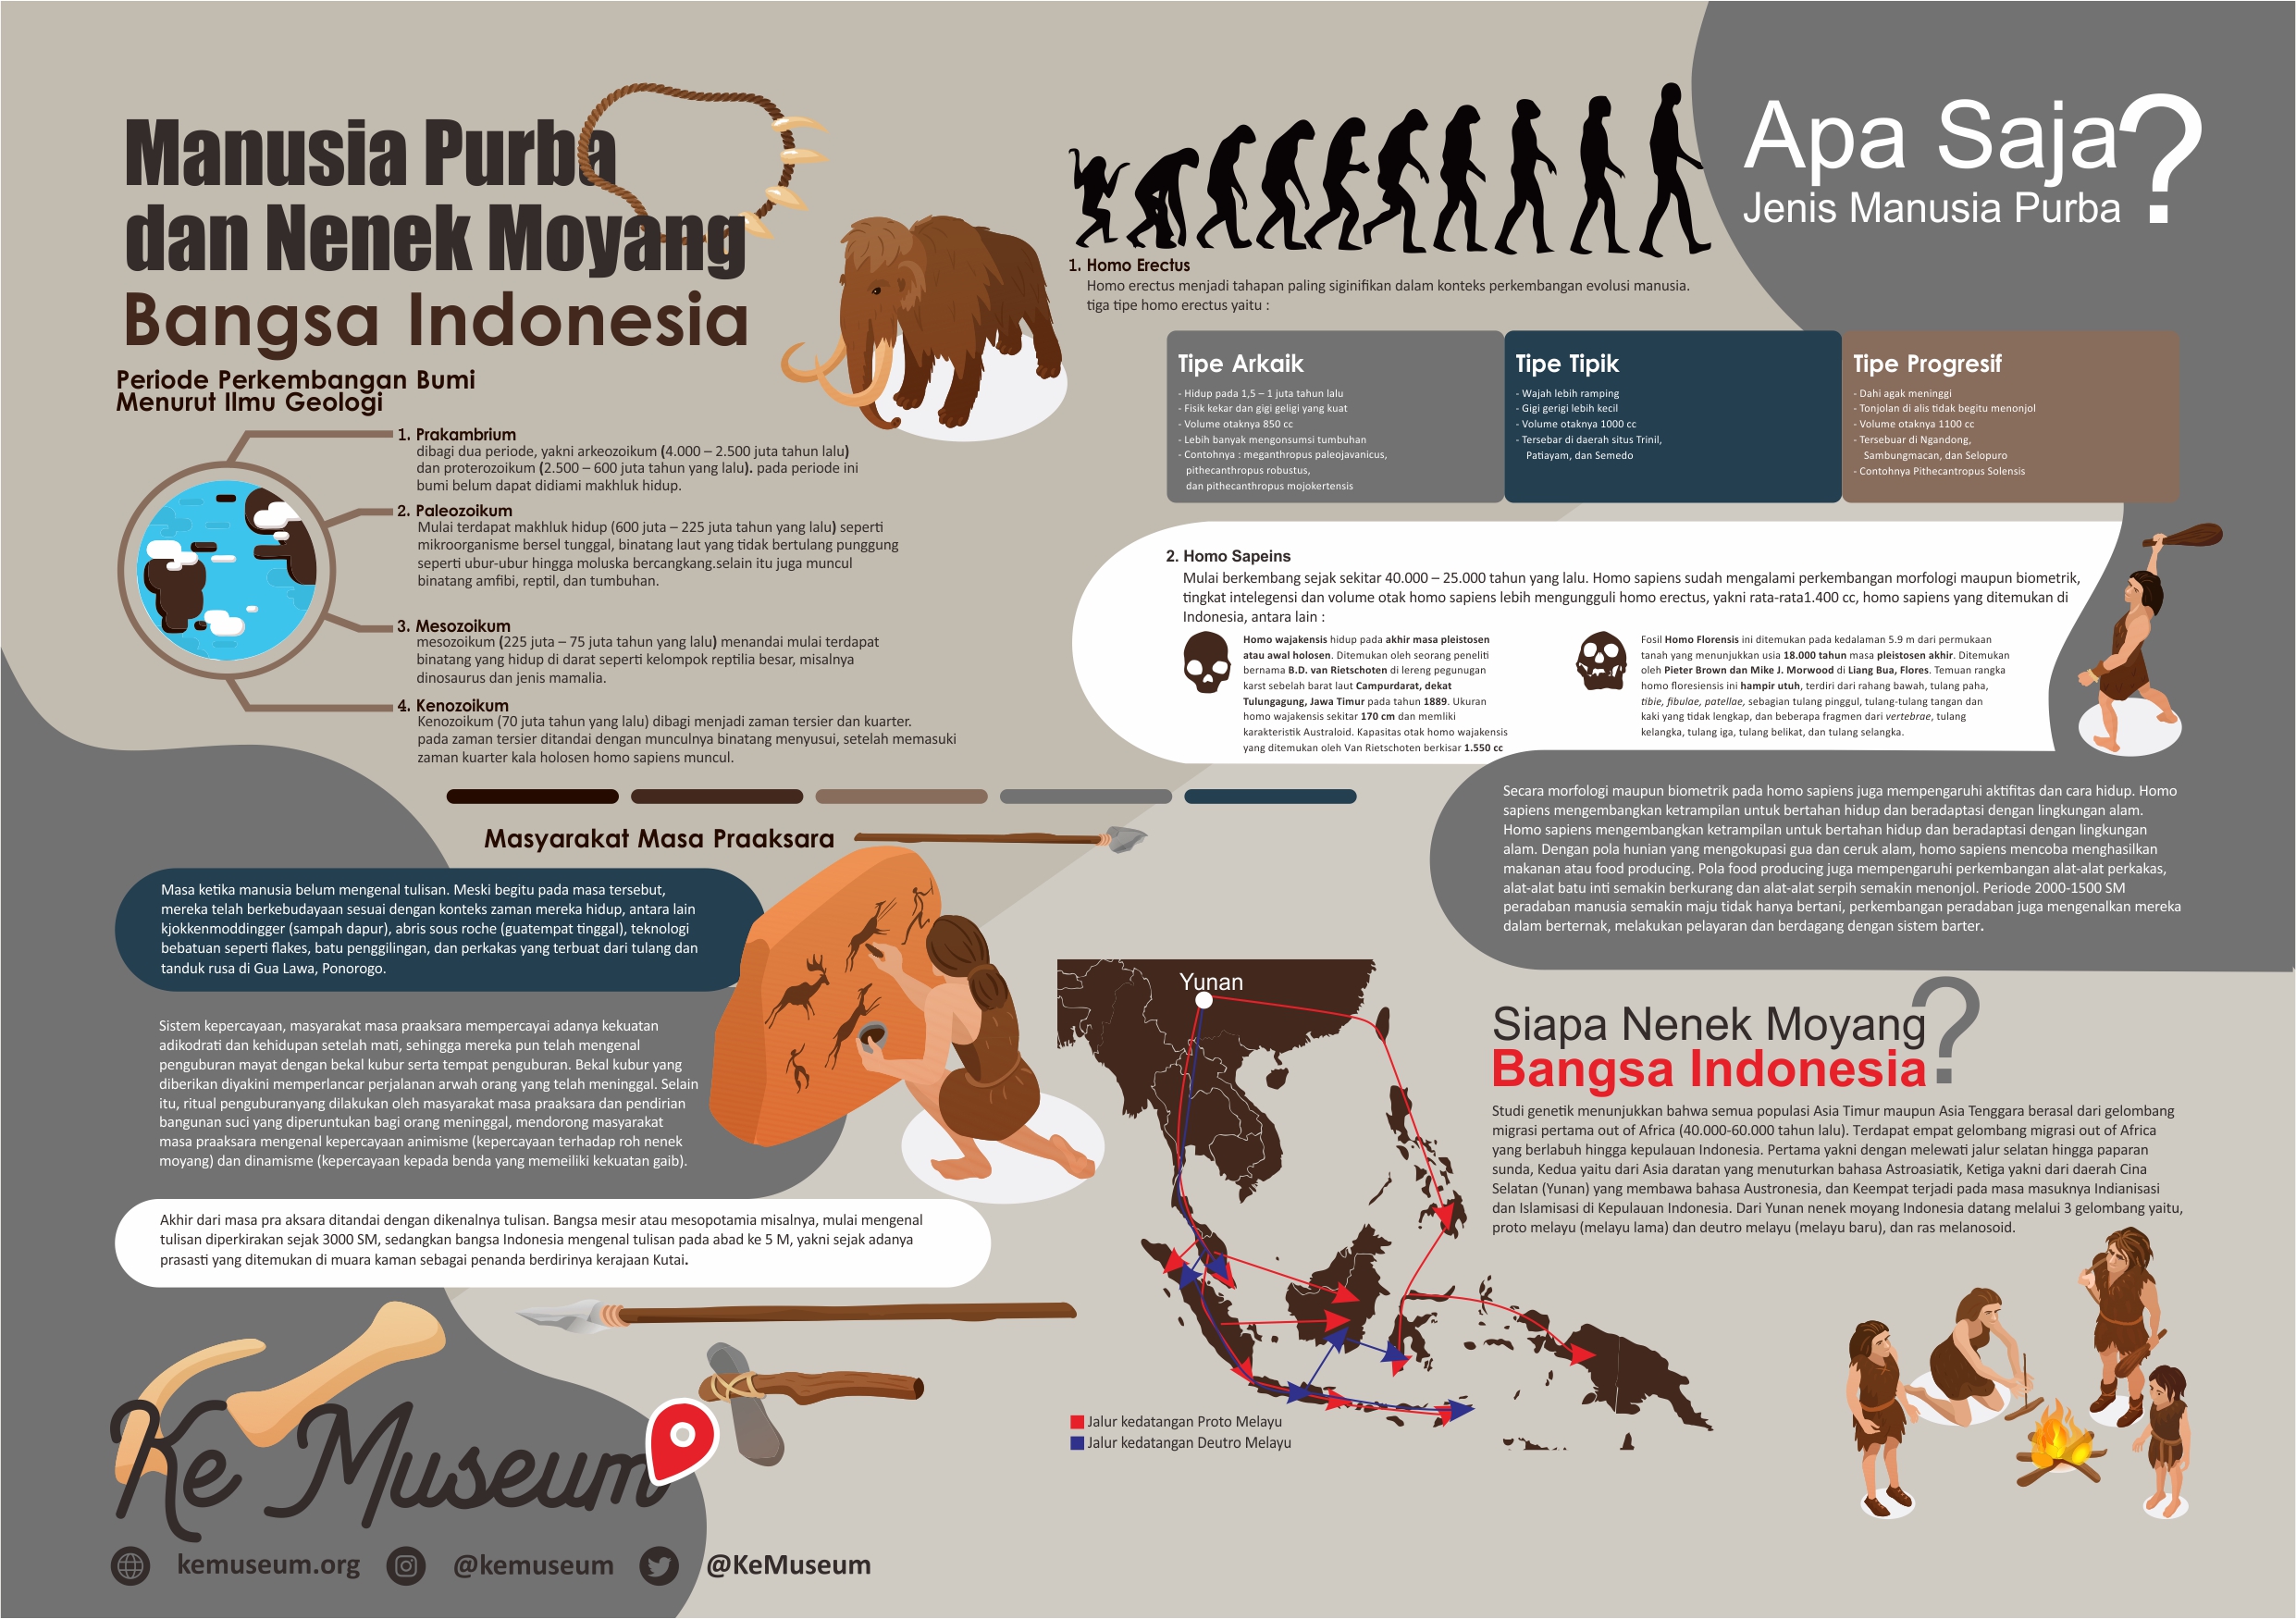 Manusia Purba dan Nenek Moyang Bangsa Indonesia